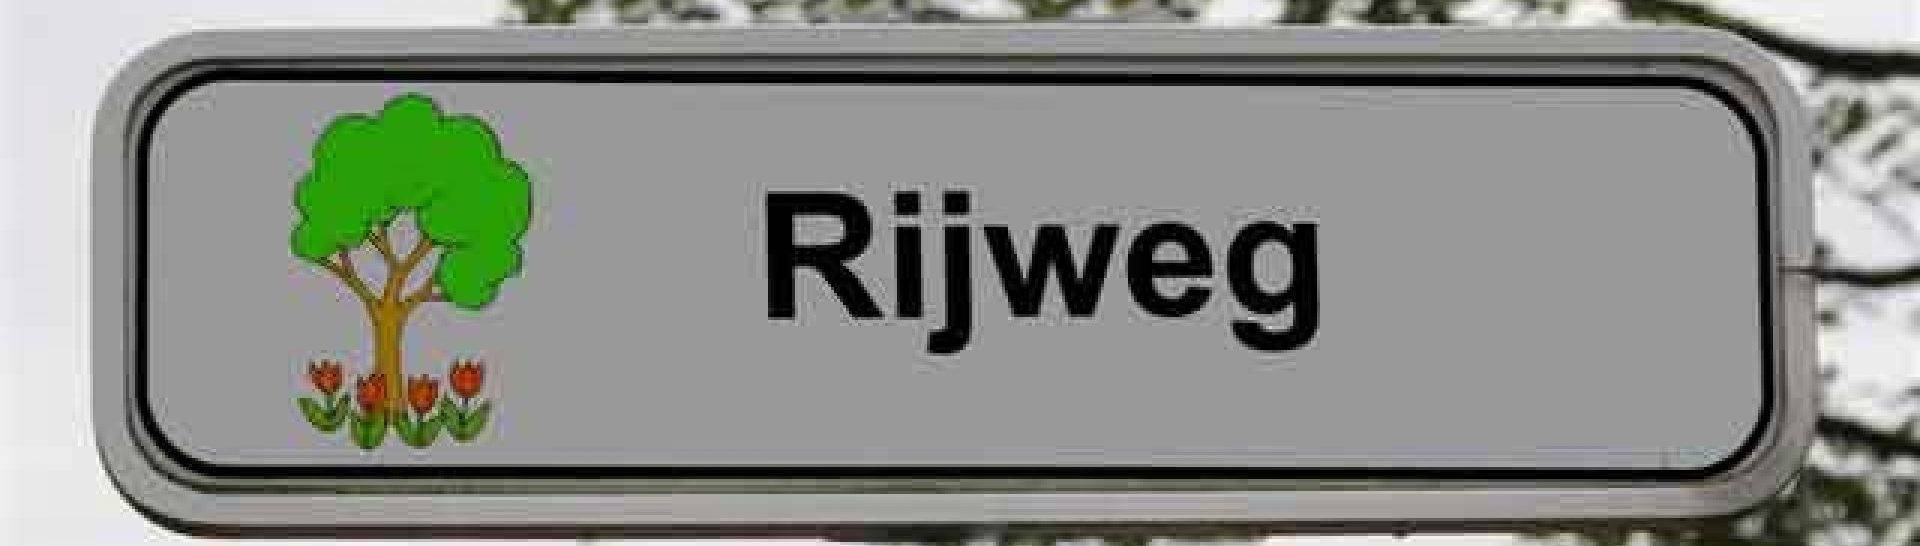 rijweg logo